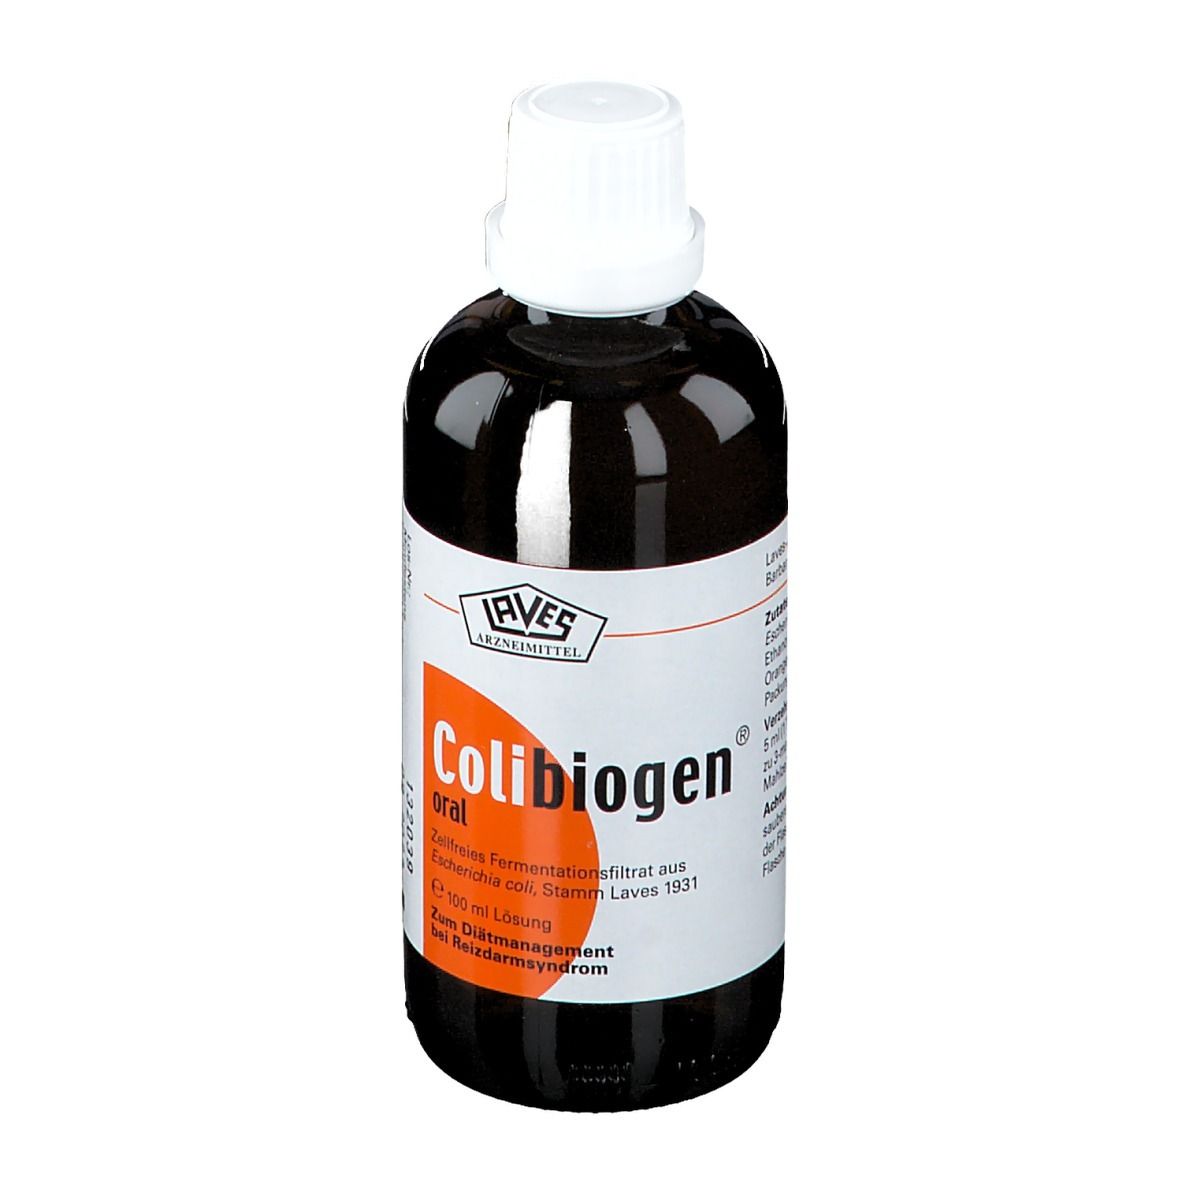 Colibiogen® oral